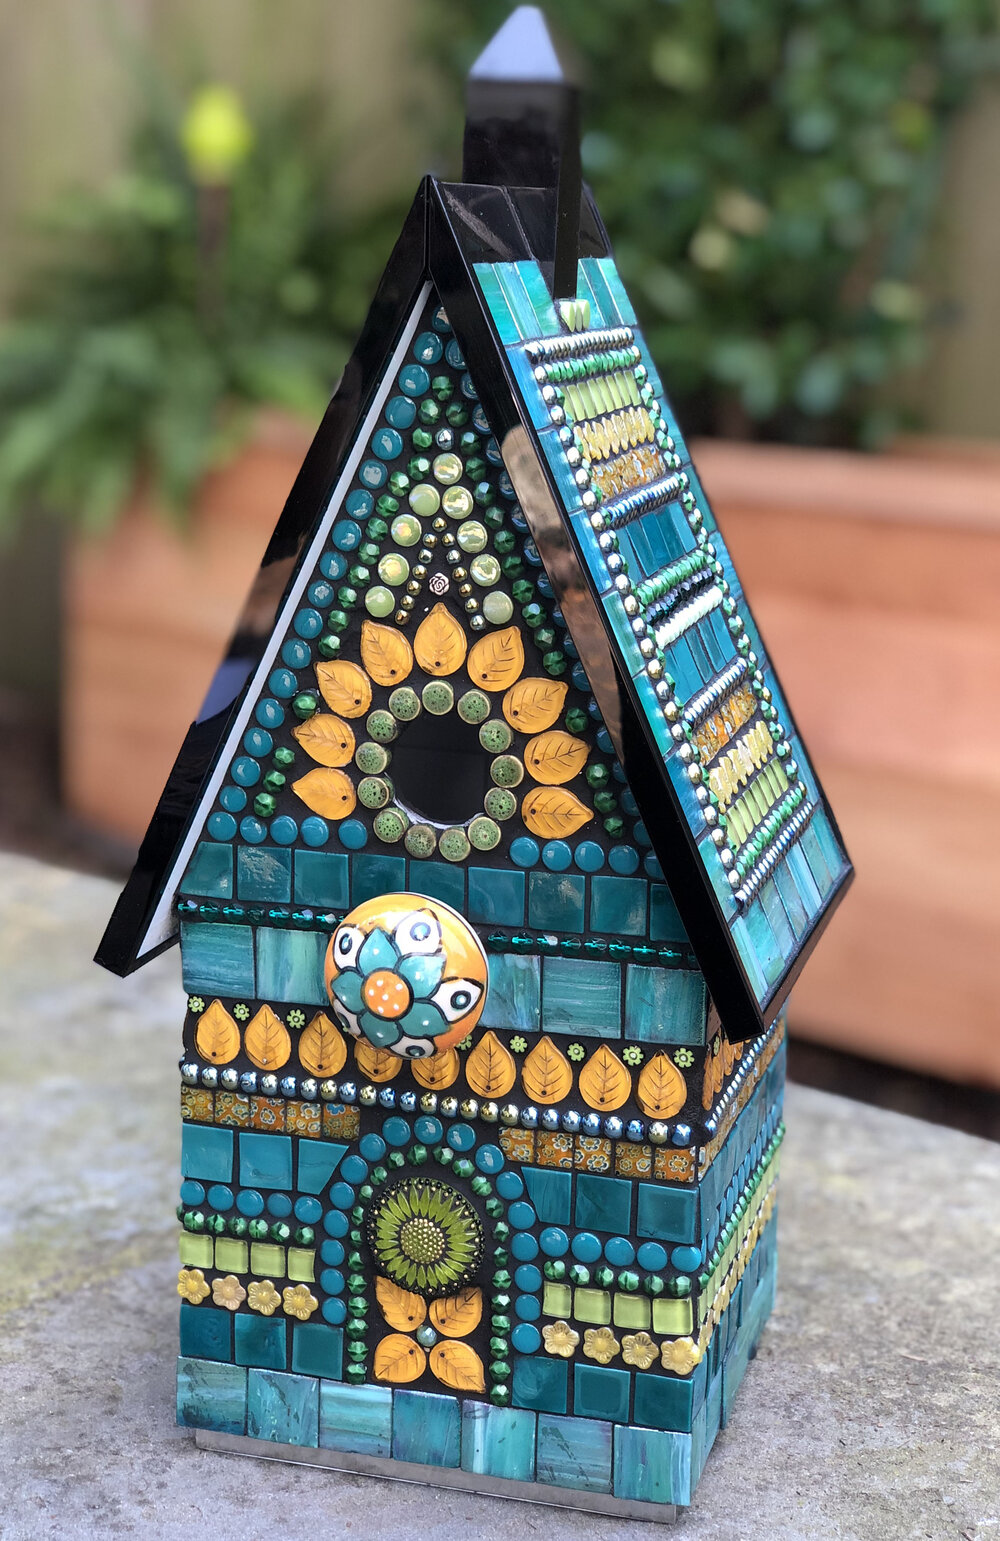 The Home Sweet Home Mosaic Birdhouse